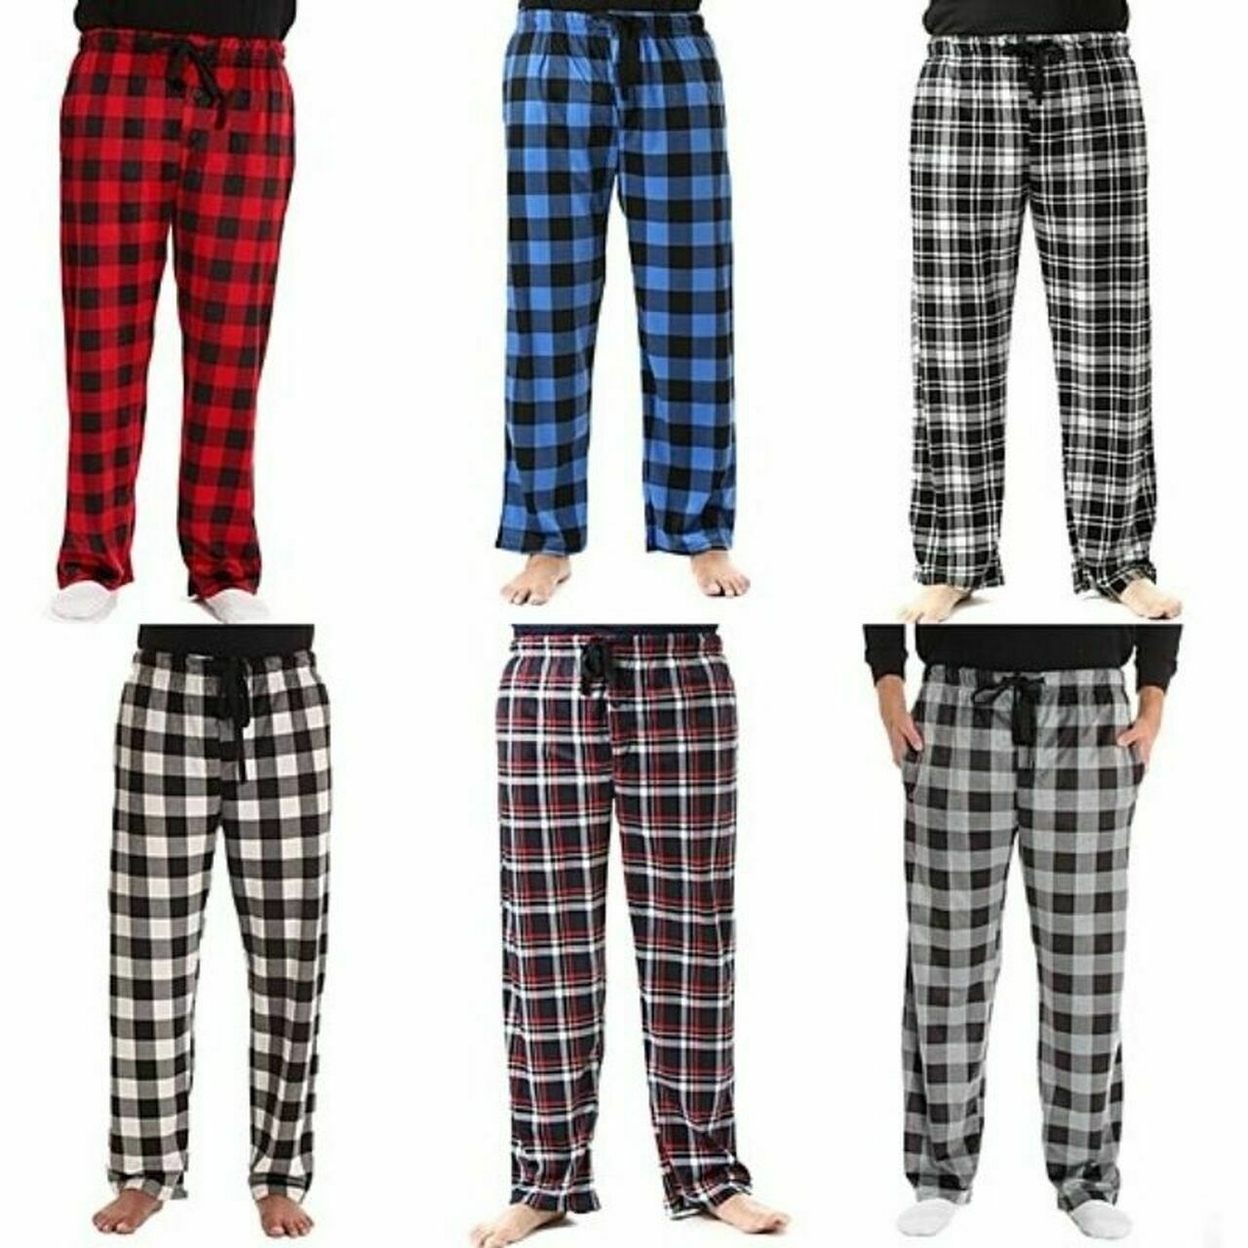 2-Pack: Men's Ultra Soft Cozy Flannel Fleece Plaid Pajama Sleep Bottom Lounge Pants - Red & Blue, X-large